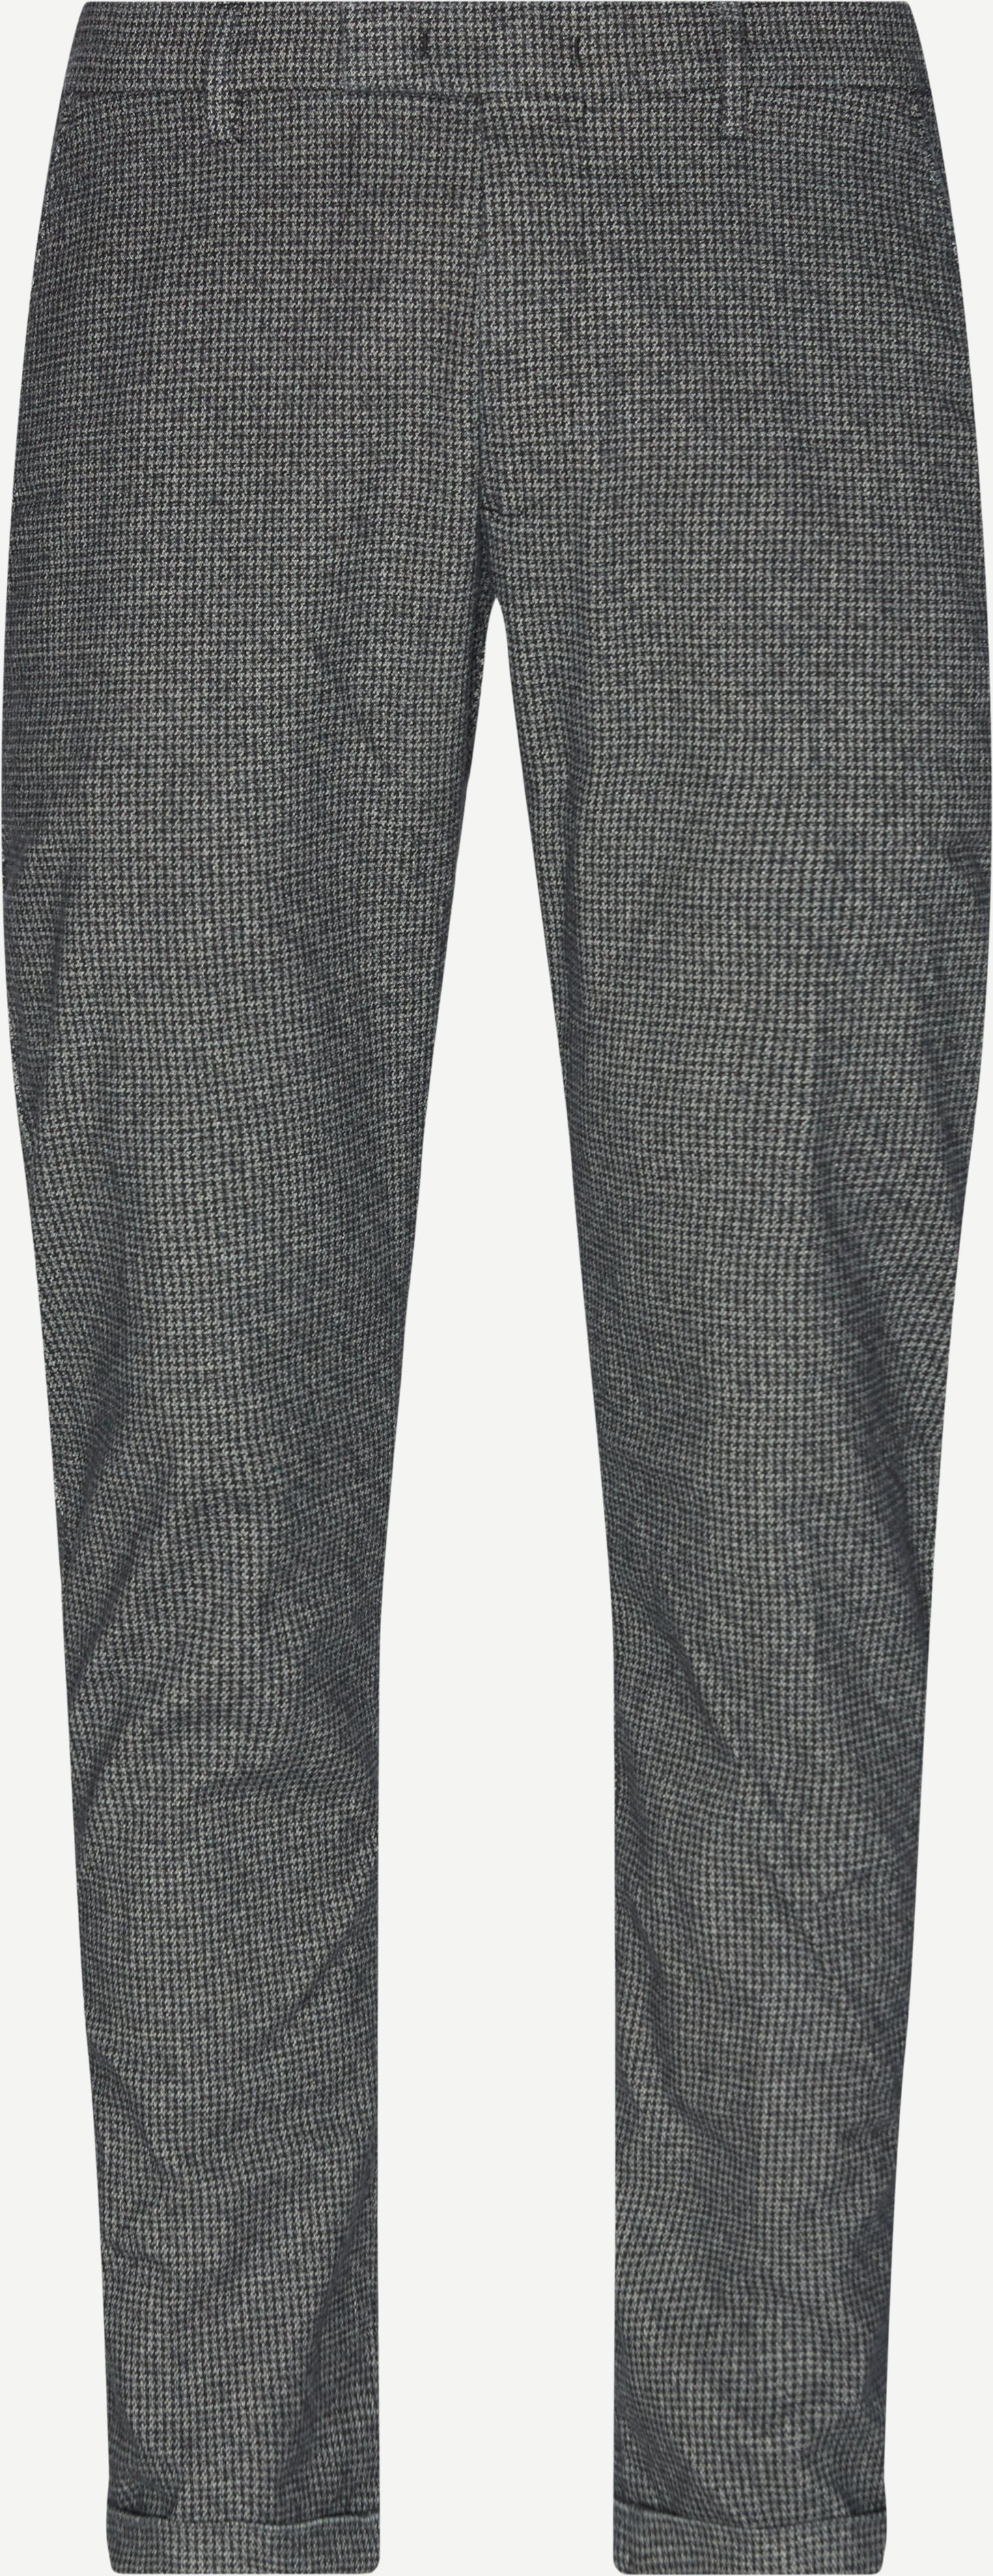 Scott 1375 Chinos - Trousers - Regular fit - Grey